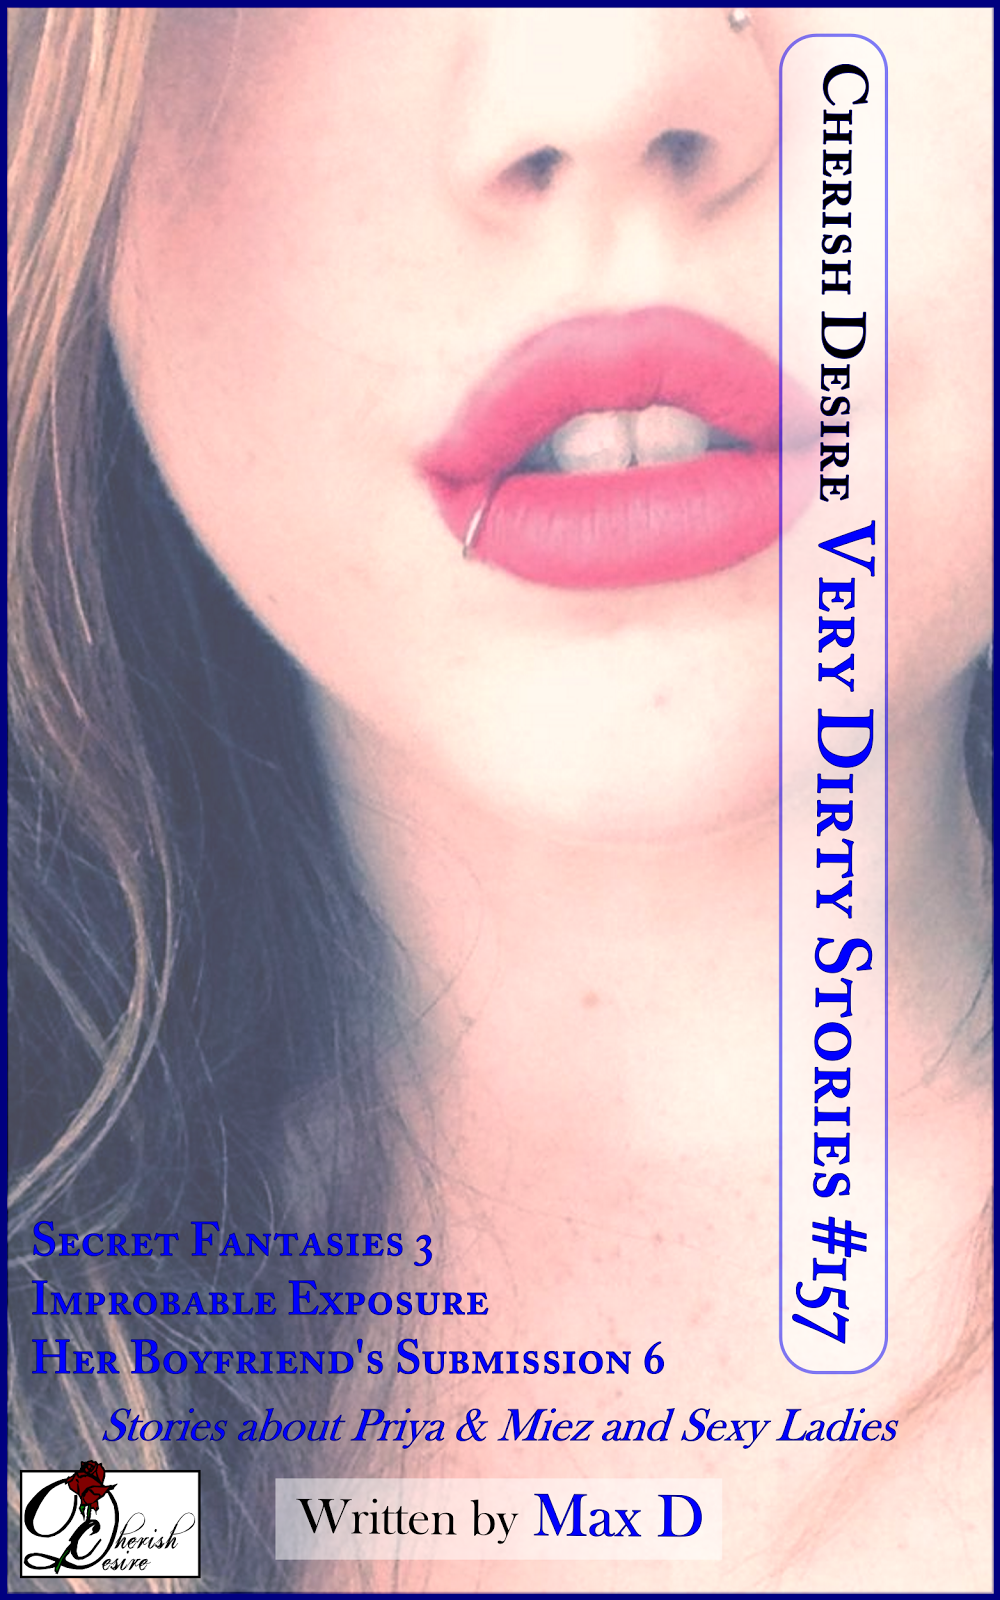 Cherish Desire: Very Dirty Stories #157, Max D, erotica